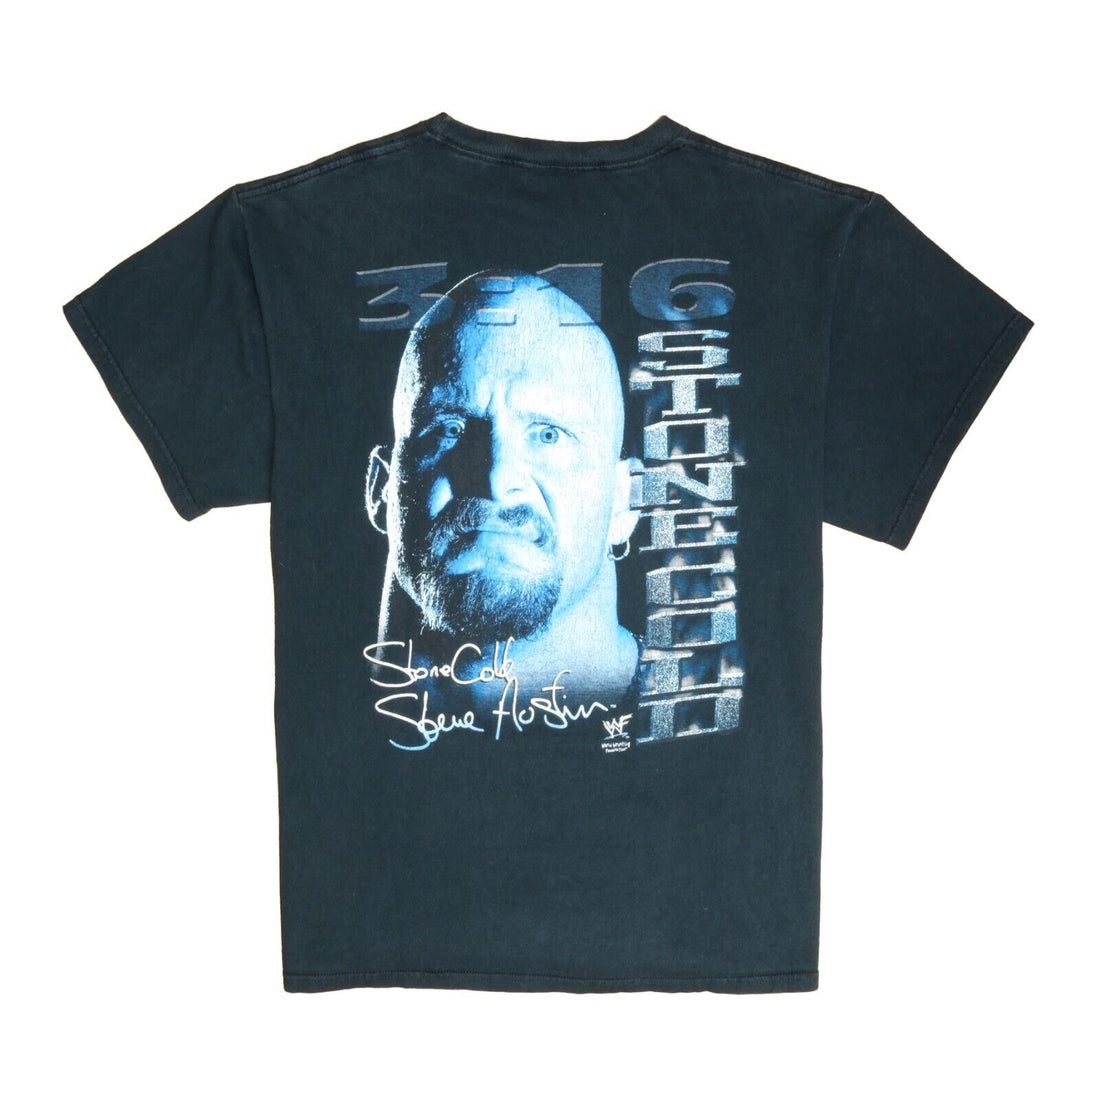 Vintage Stone Cold Steve Austin 3:16 Wrestling T-Shirt Size XL WWF